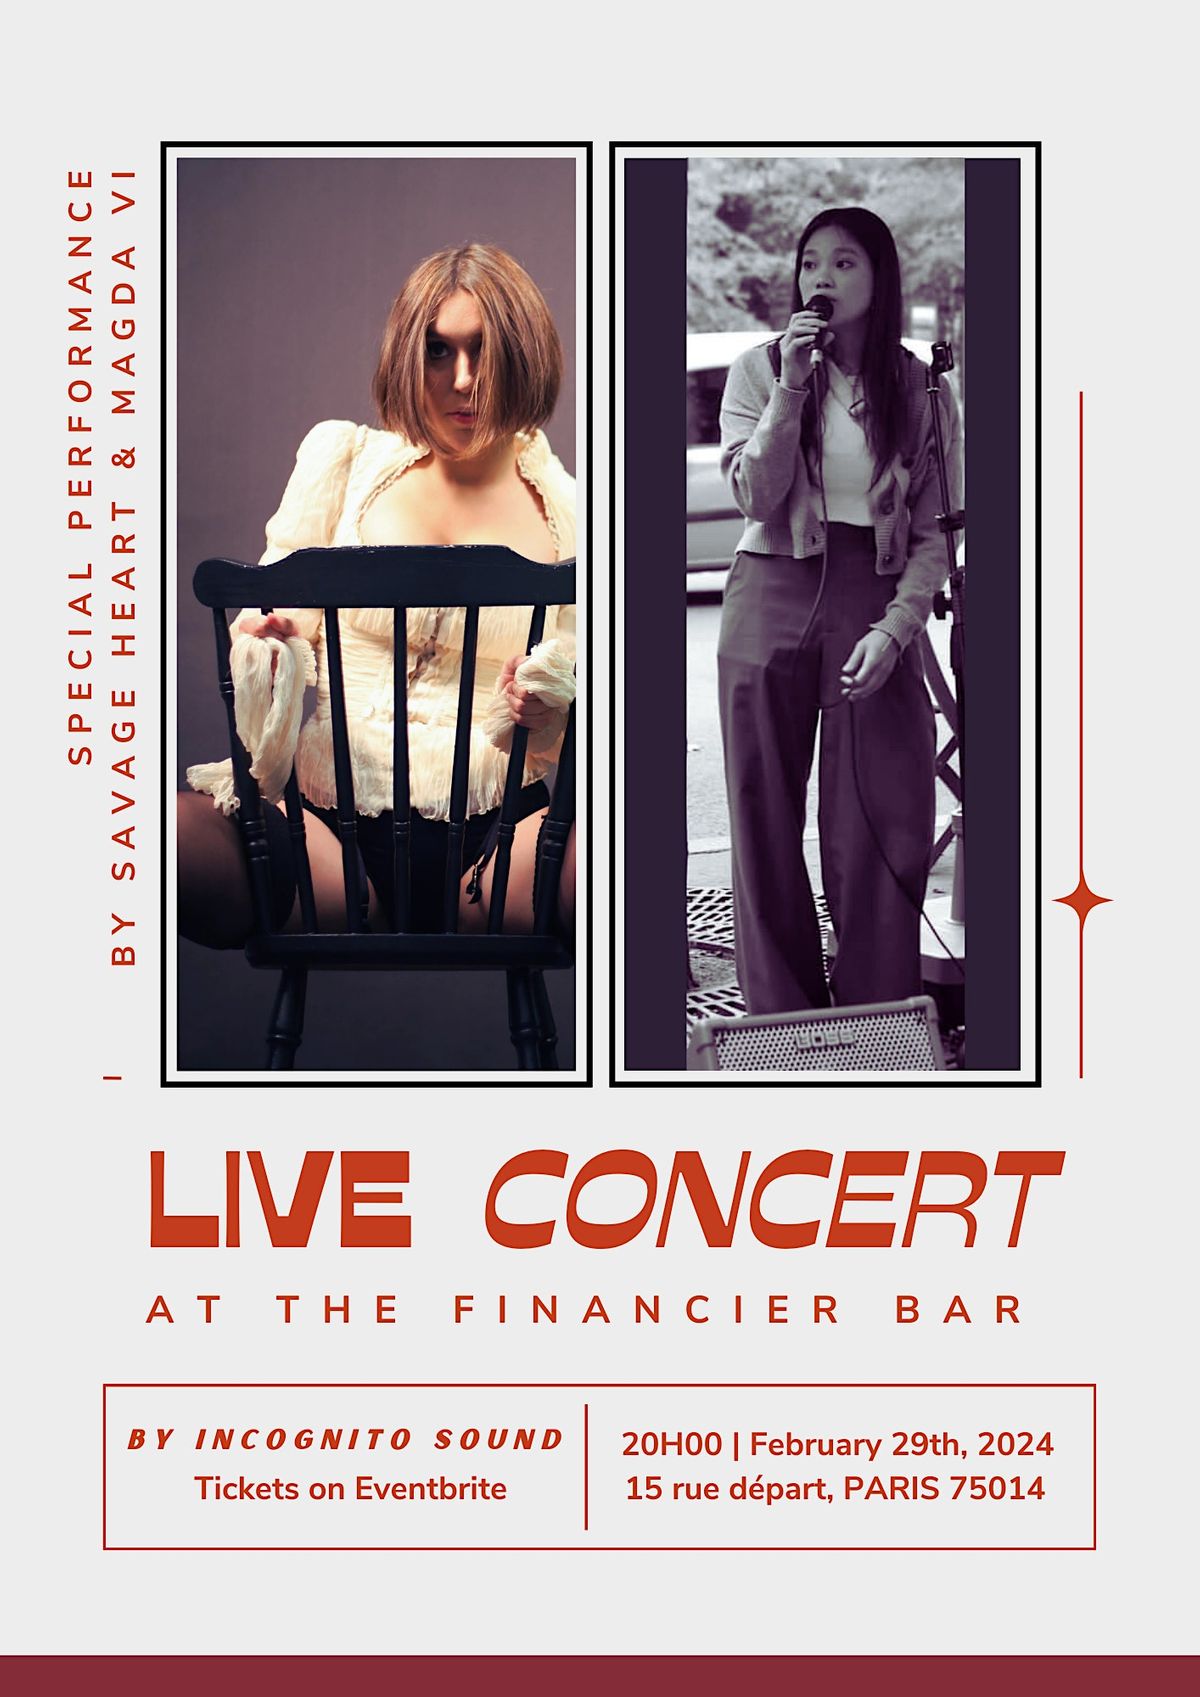 The Financier Bar Thursday Night Show